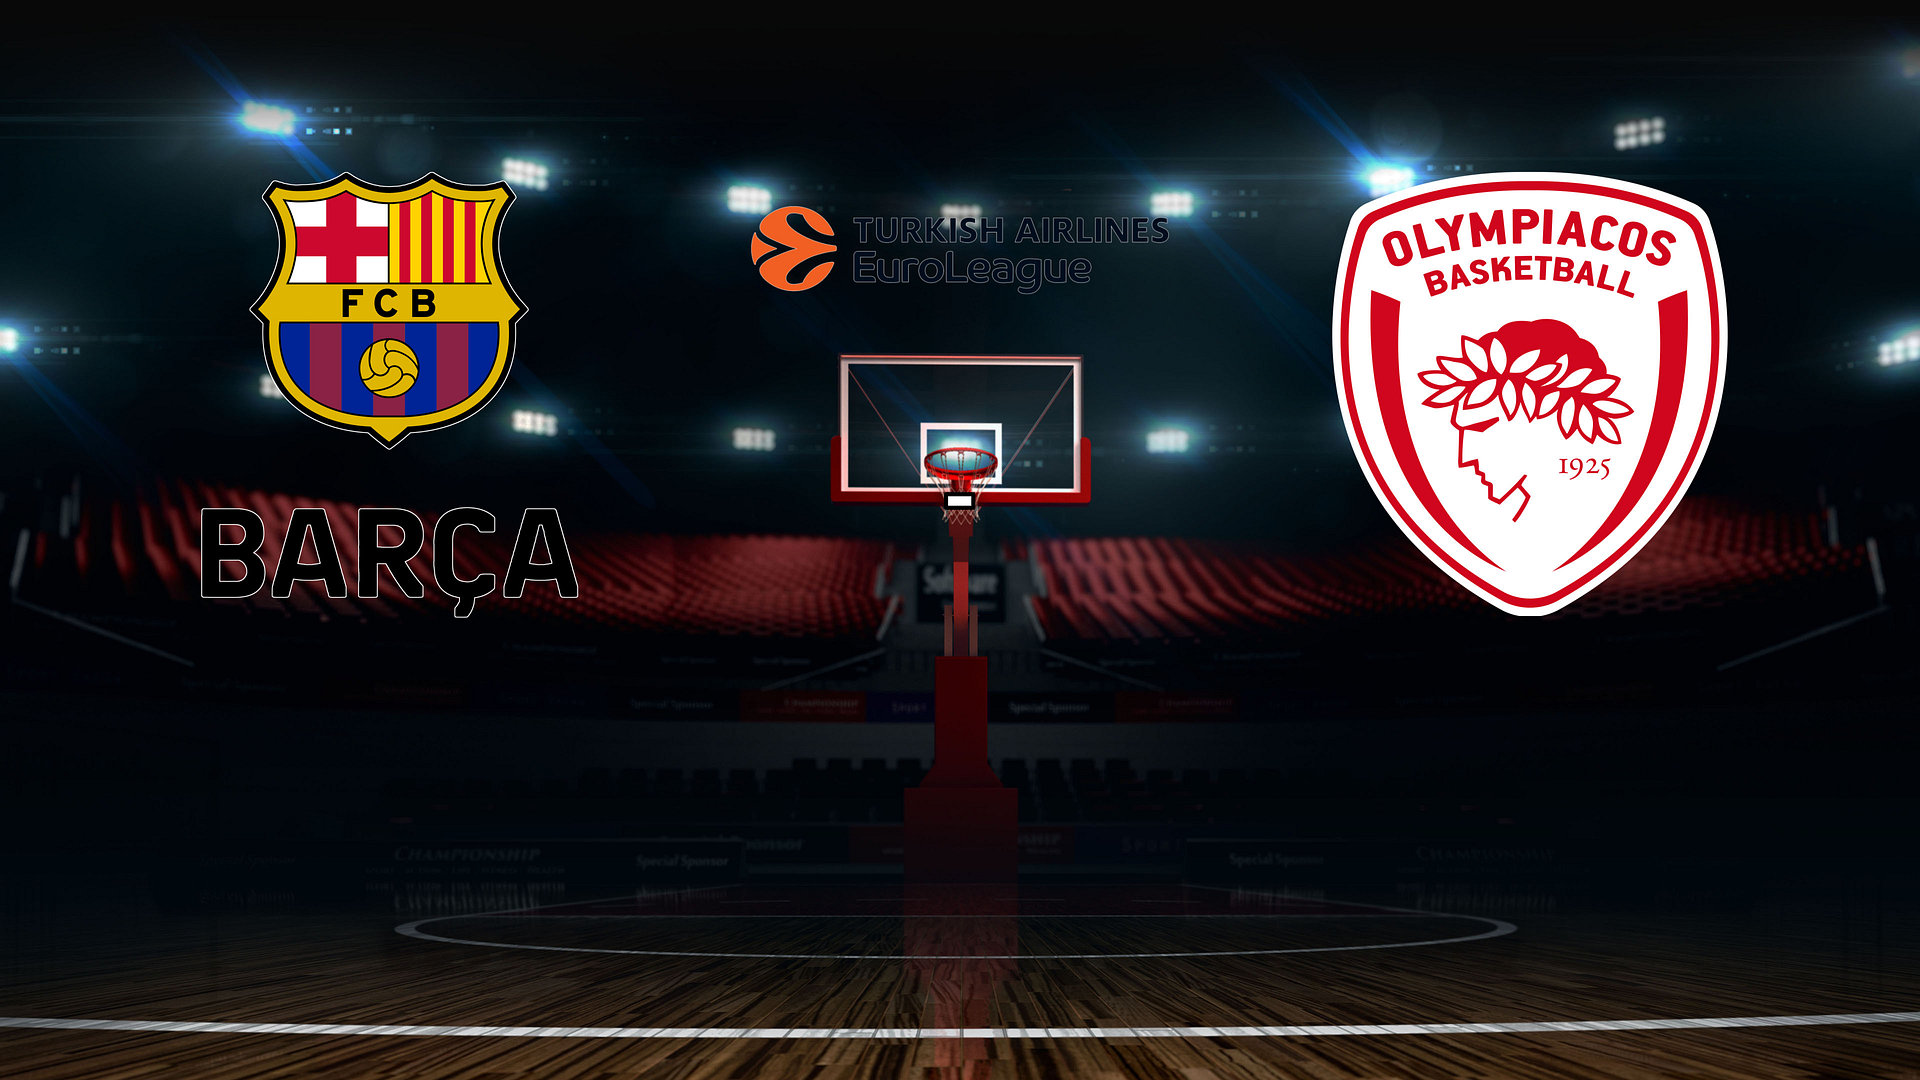 EuroLeague Basketball: Barcelona - Olympiacos